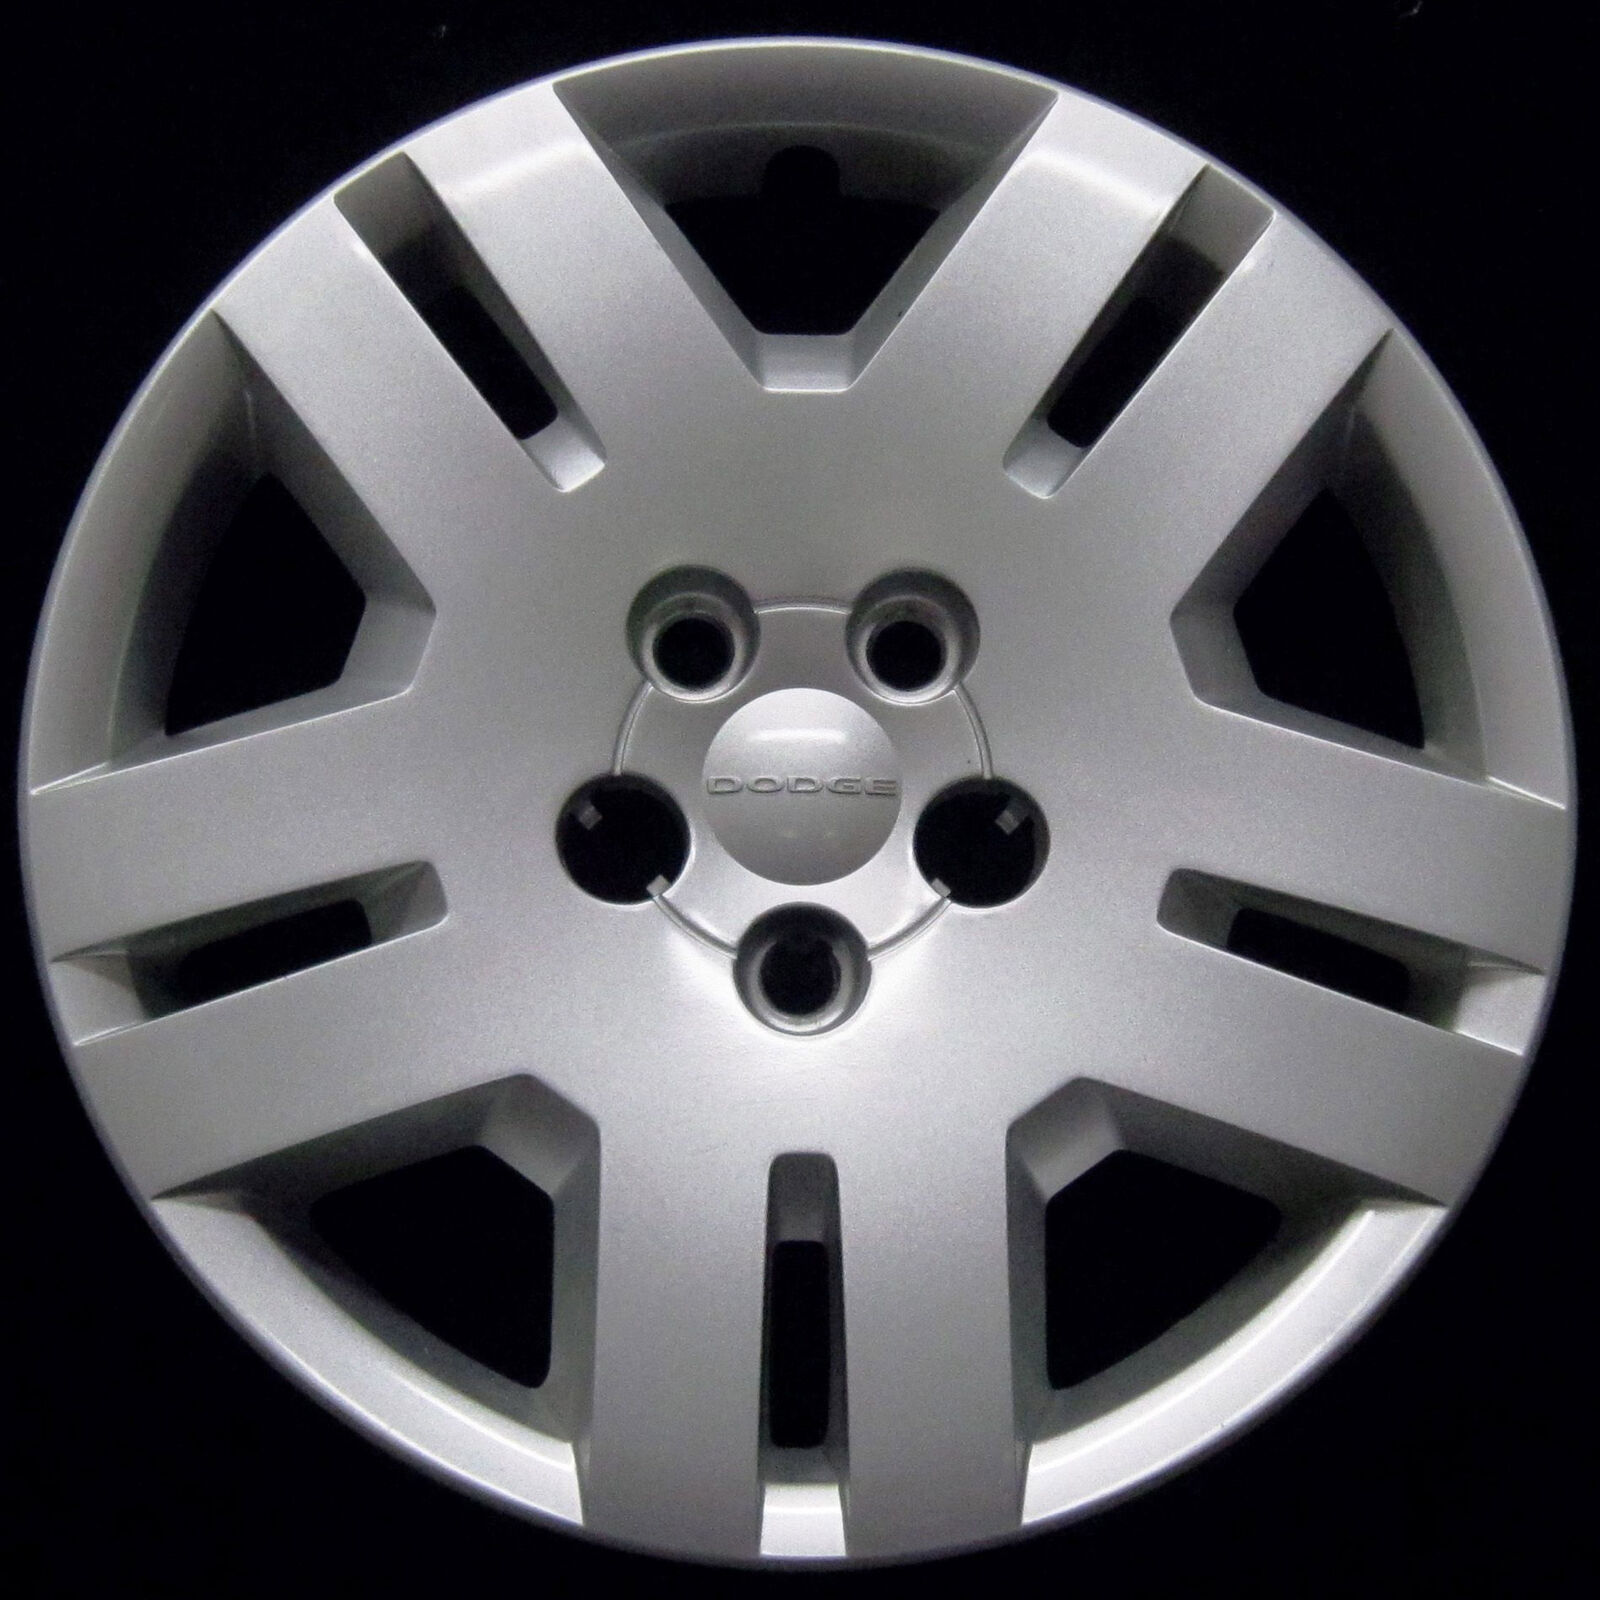 Hubcap for Dodge Avenger 2011-2014 - Genuine Factory OEM Wheel Cover 8038 Silver